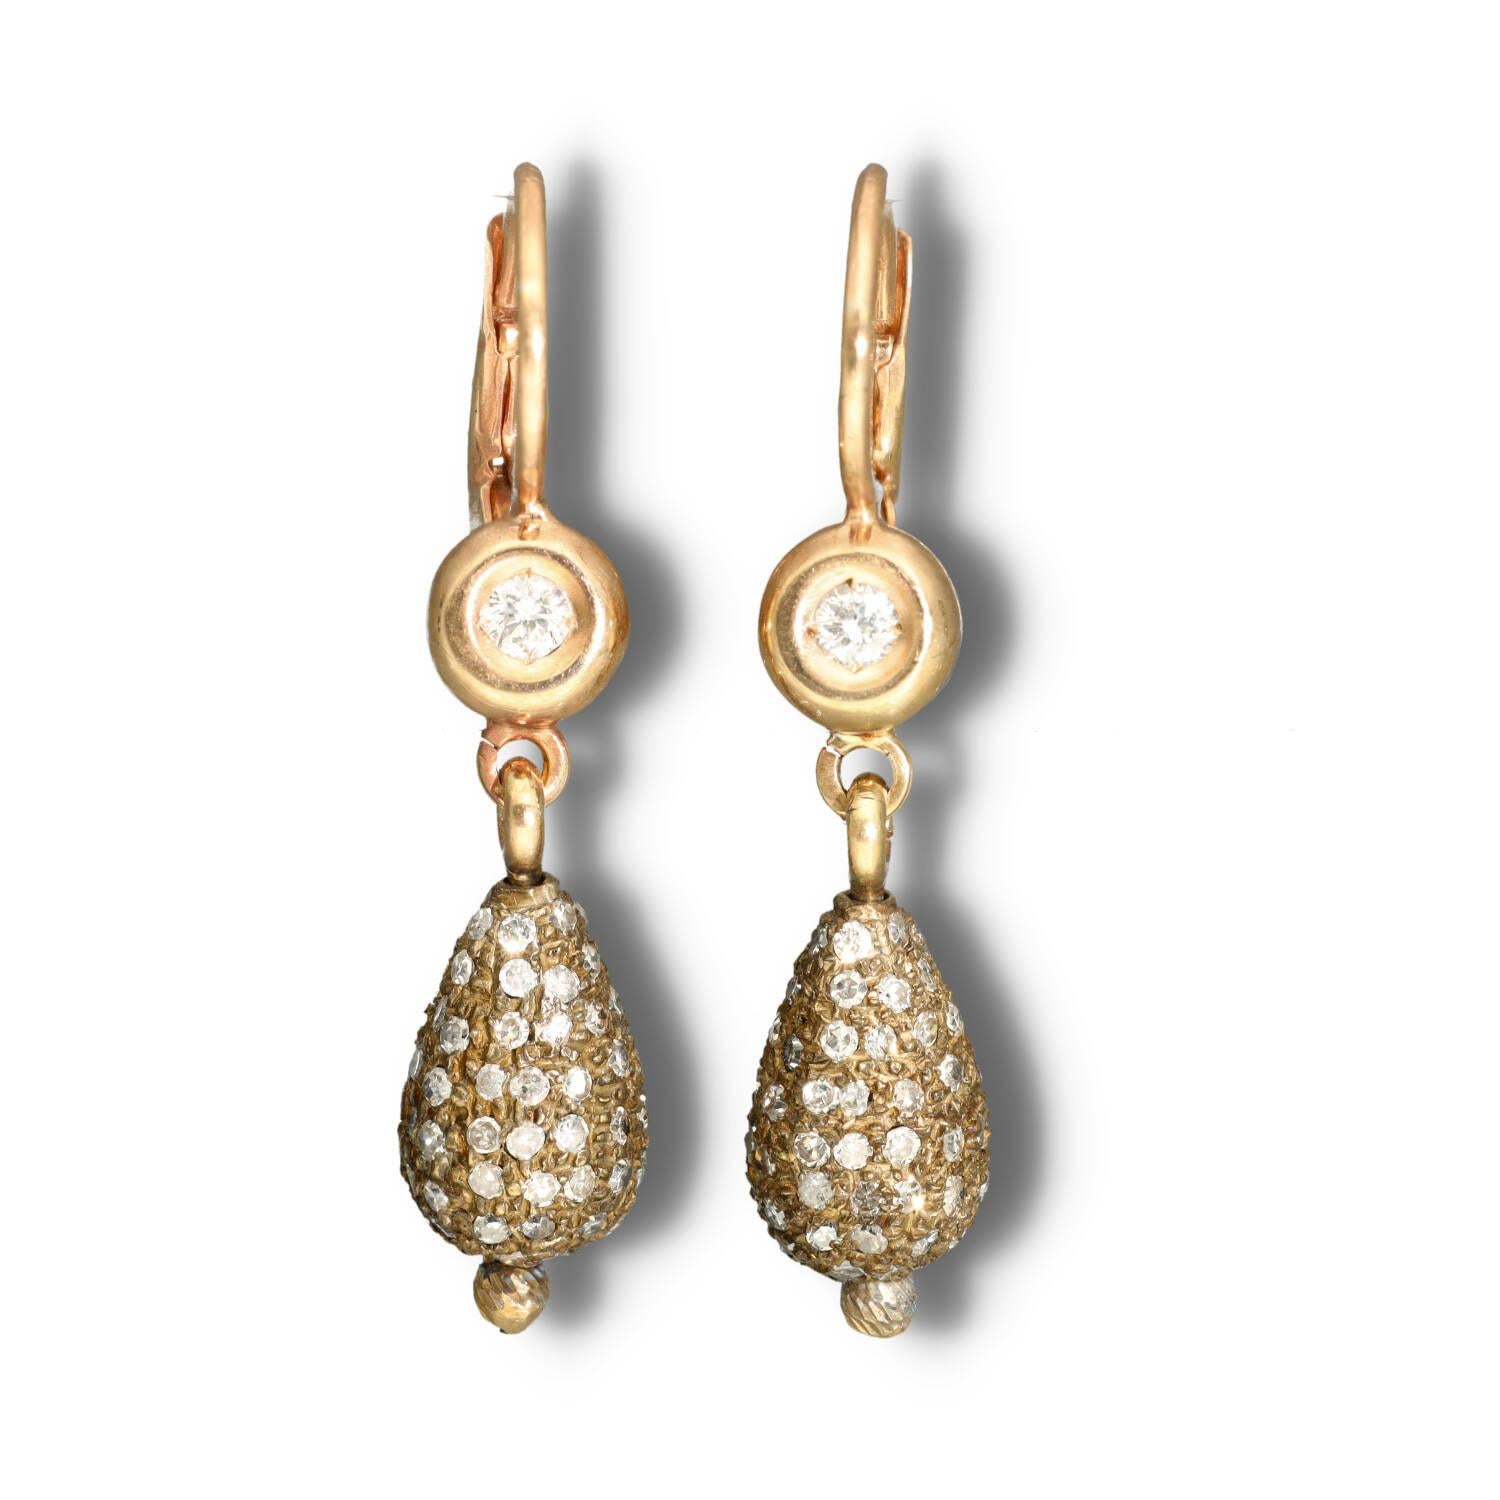 Brilliant Cut Vintage Rose Gold Pave Diamond Earrings, Vintage Drop Pave Diamond Earrings